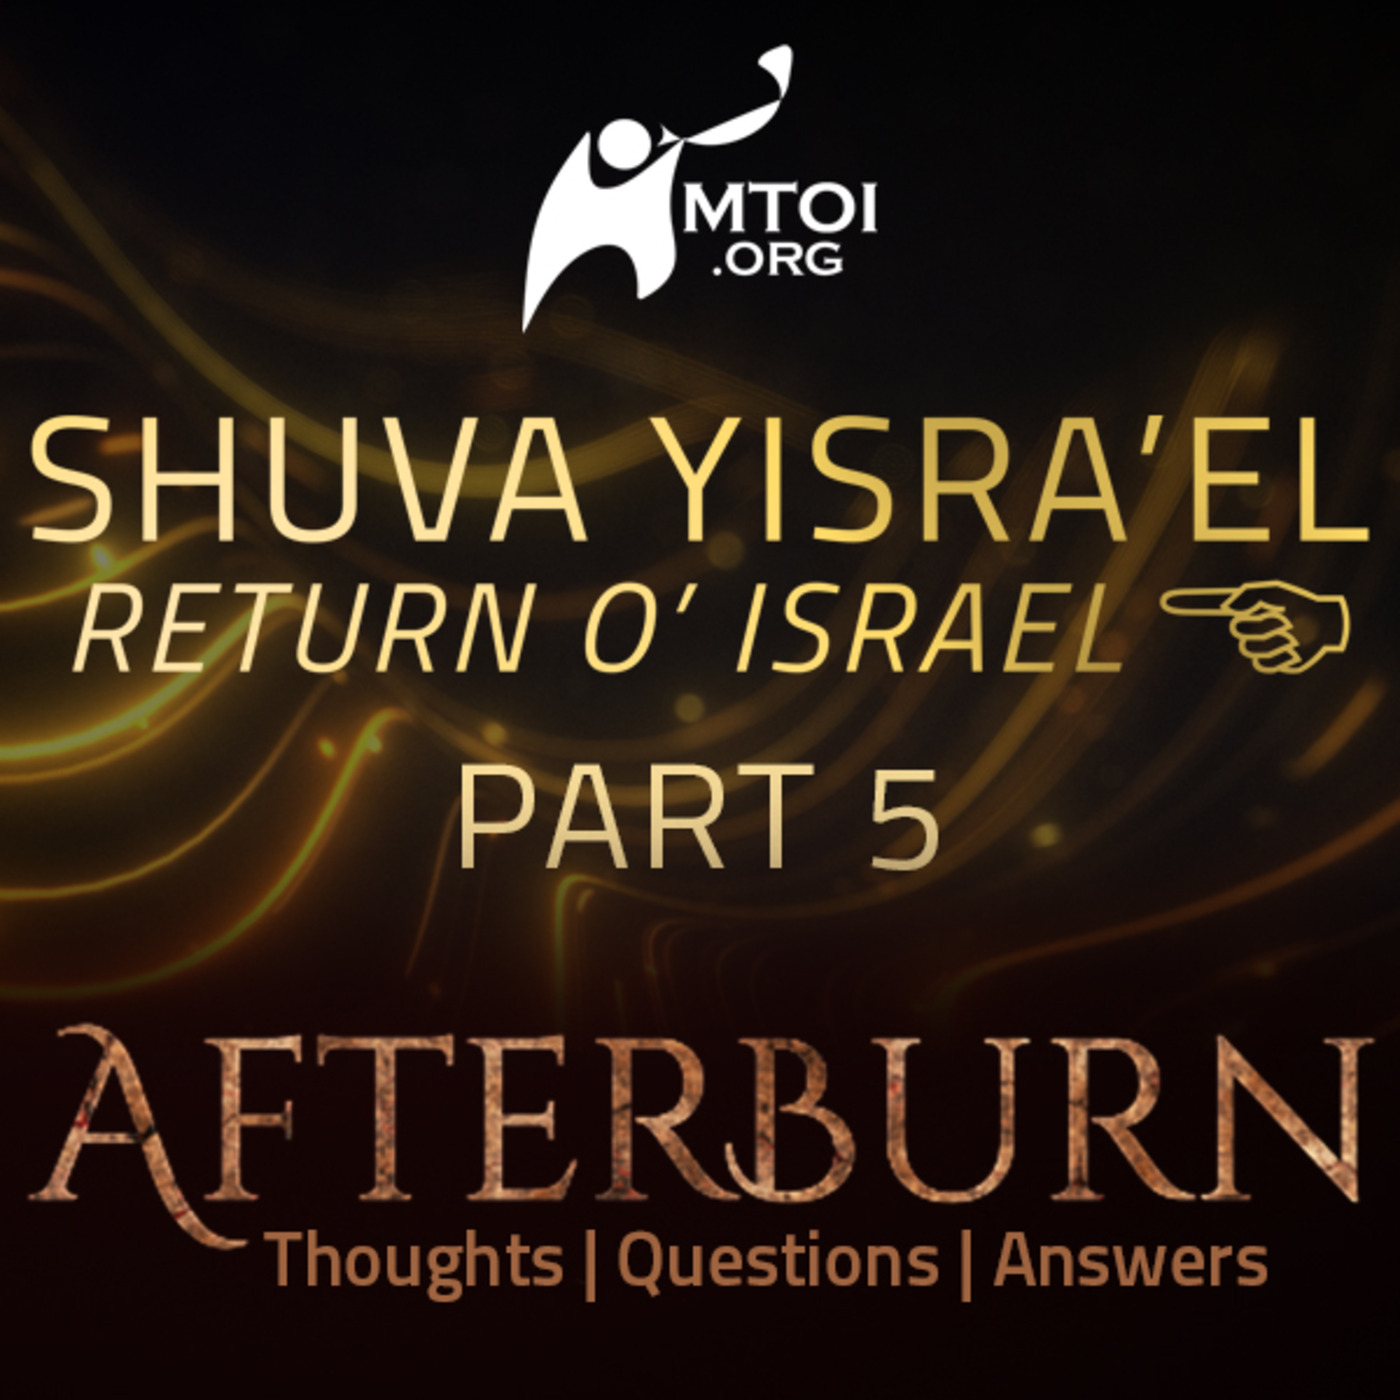 Episode 681: Afterburn | Thoughts, Q&A on Shuva Yisra’el (Return O’ Israel) | Part 5